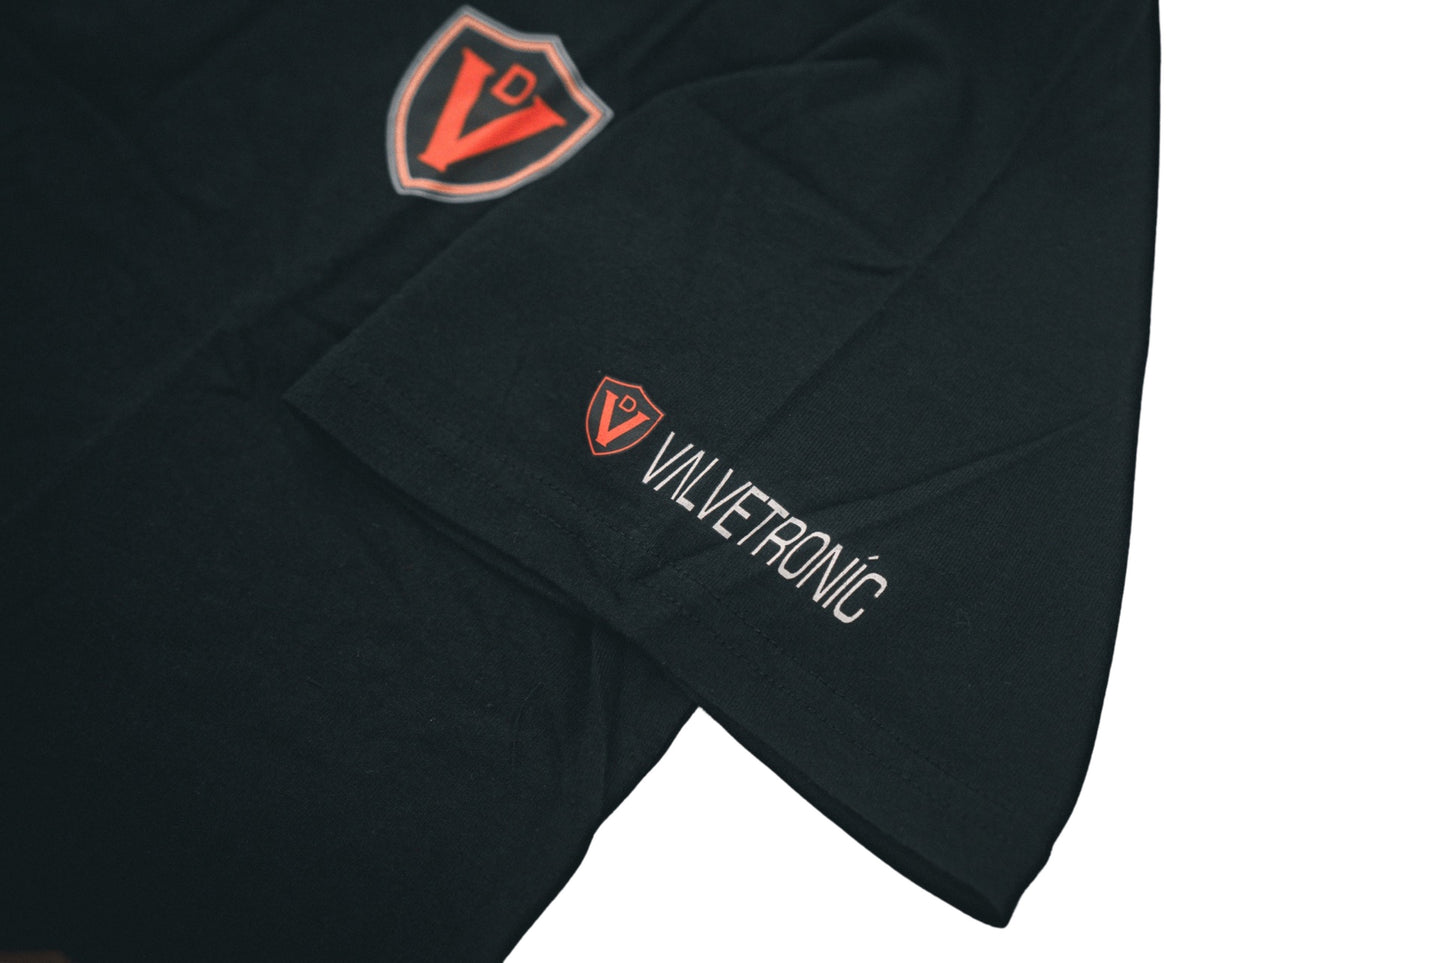 Valvetronic Designs T-Shirt